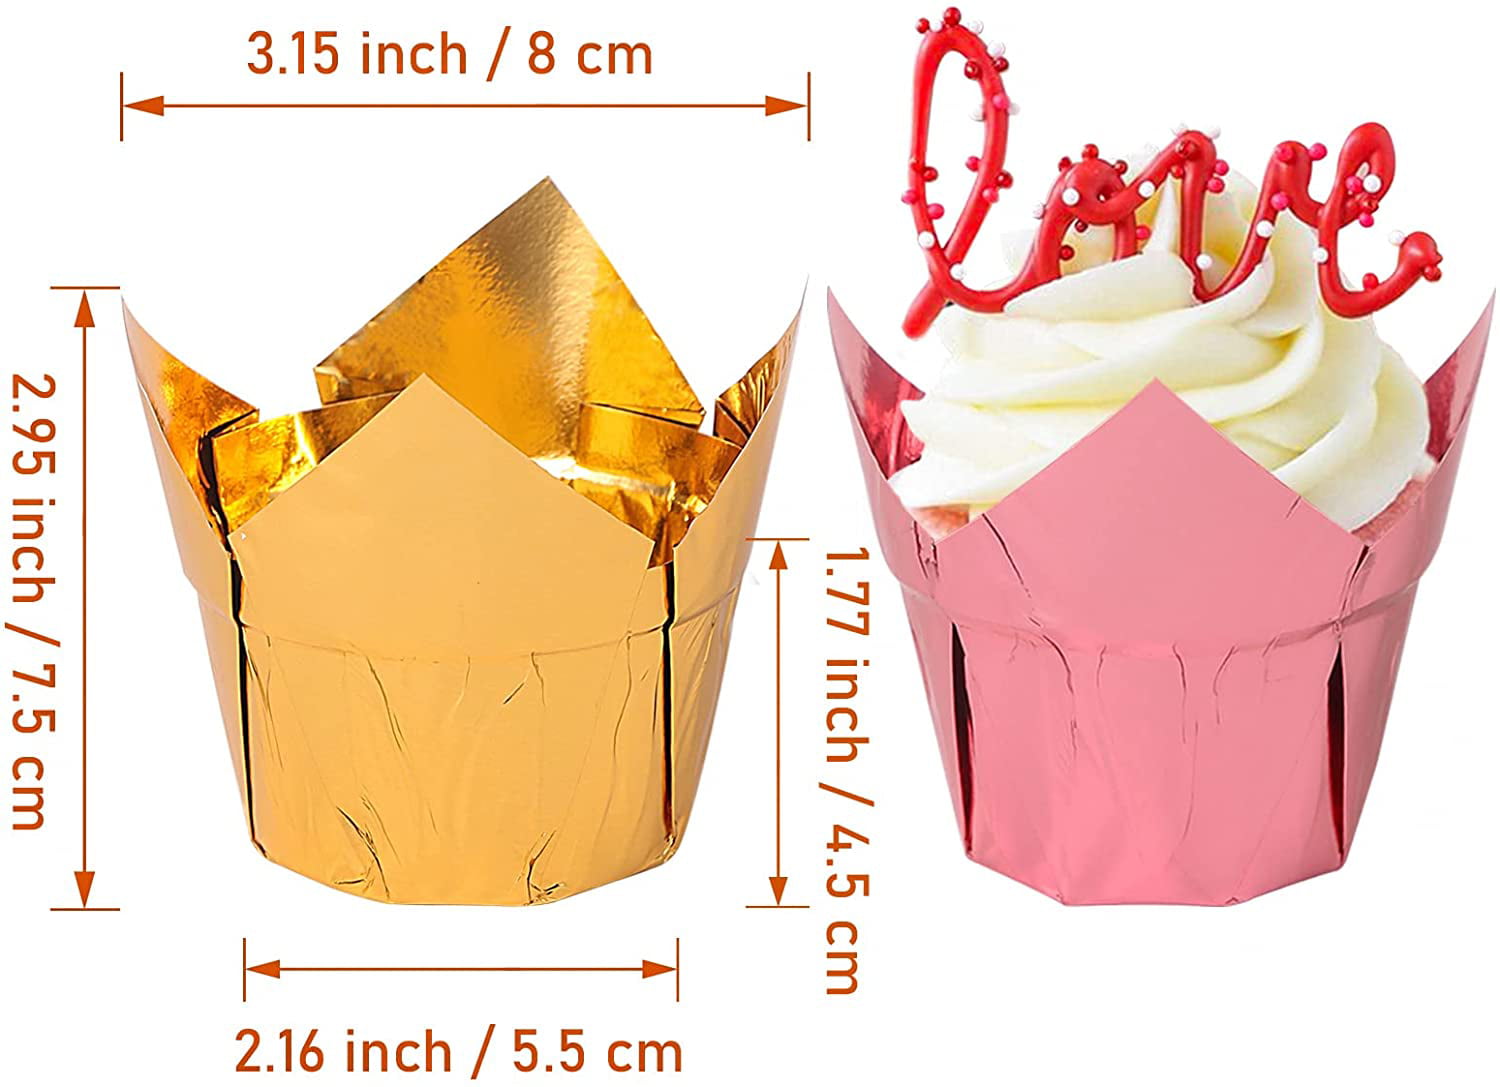 50 pcs Gold & Silver Aluminum Foil Cupcake Liners – Sweet Crafty Tools